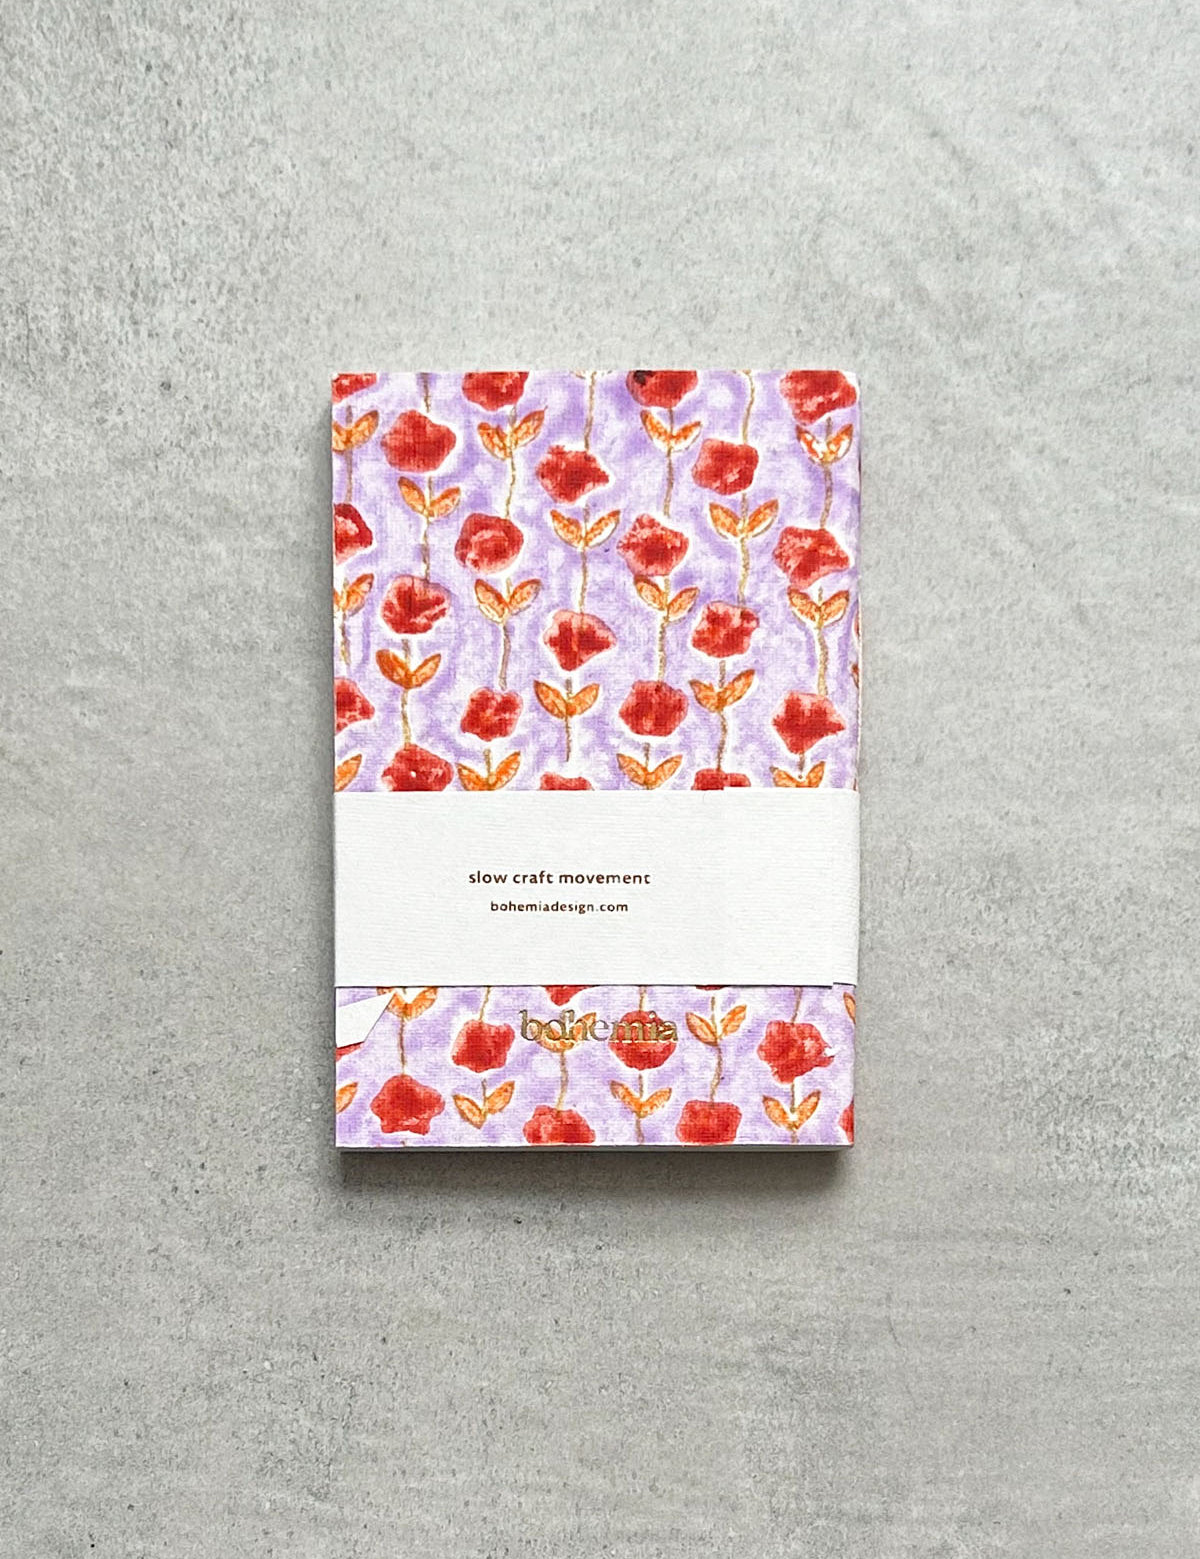 garland-hand-block-print-notebook-lilac-bohemiadesign2.jpg